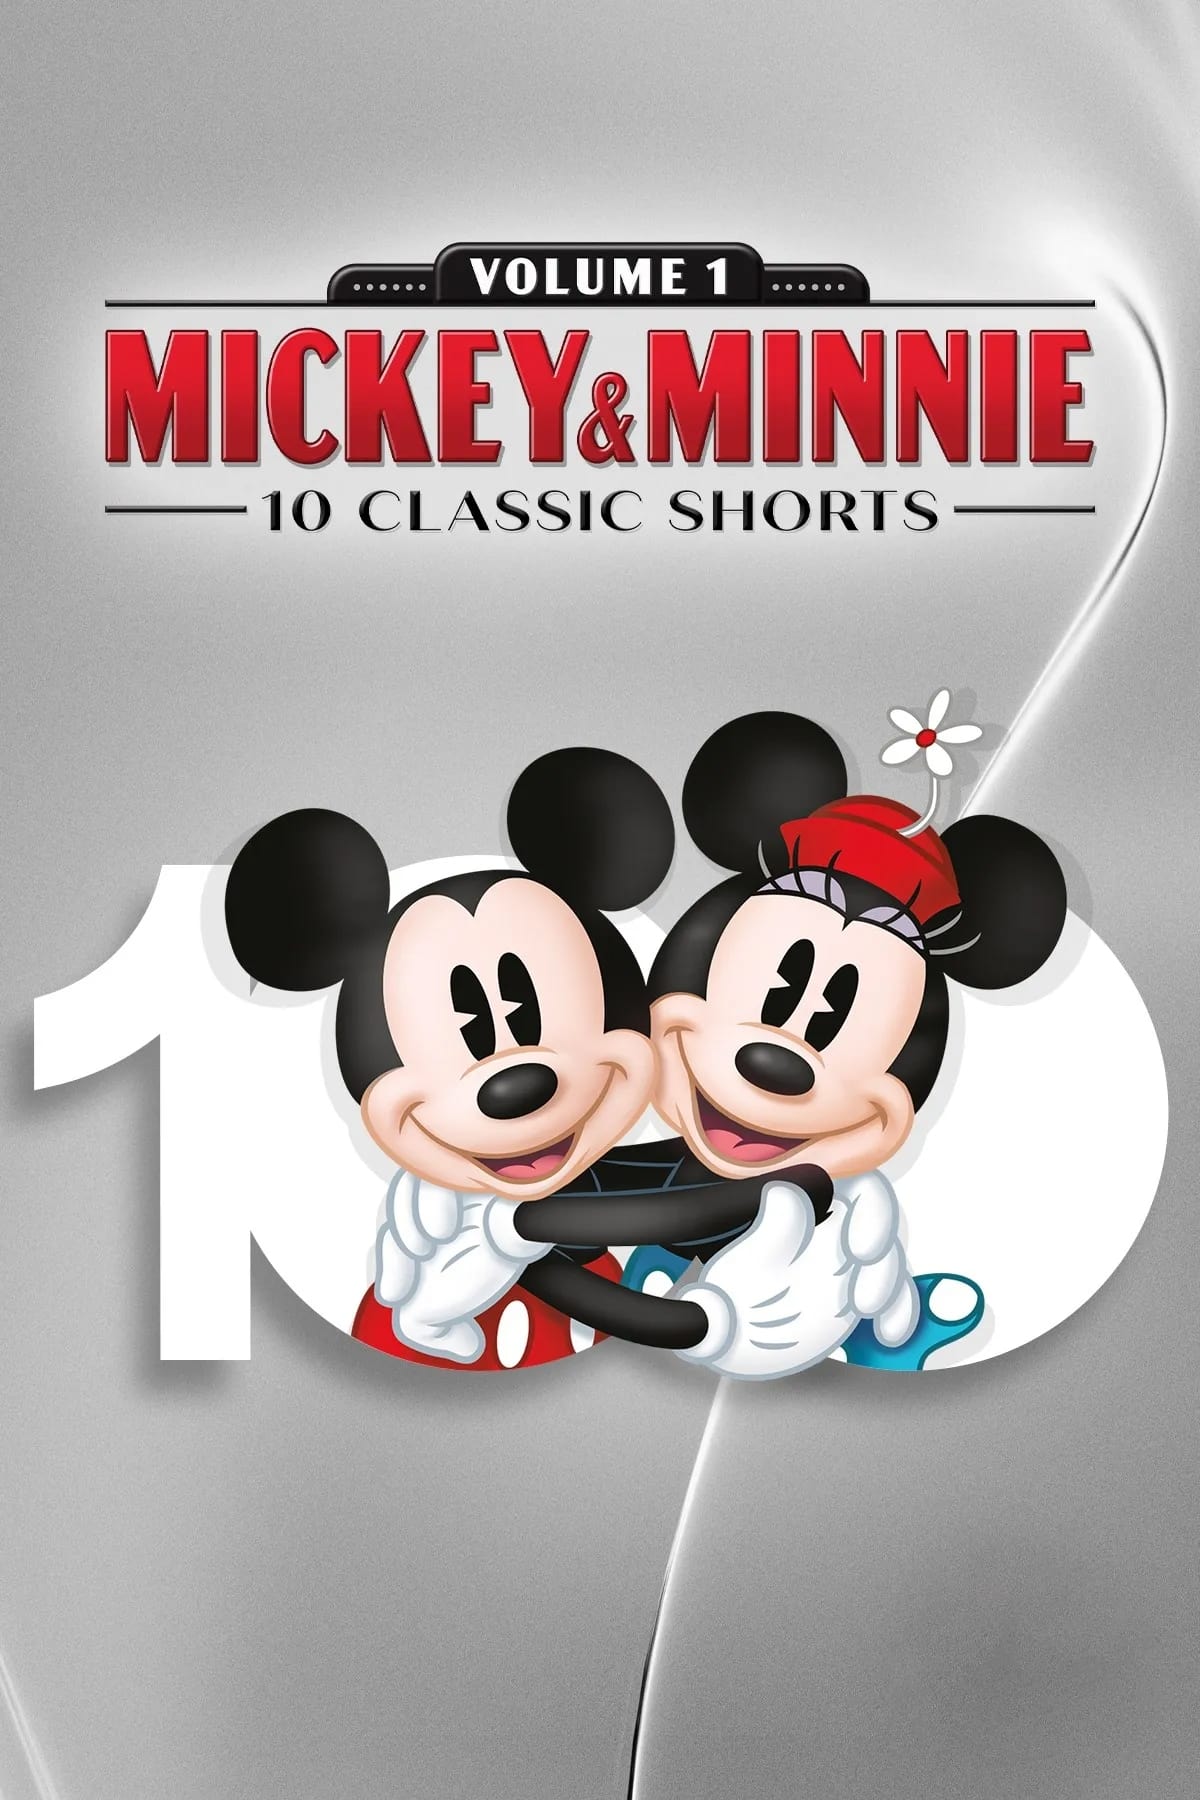 Mickey & Minnie 10 Classic Shorts (Volume 1)